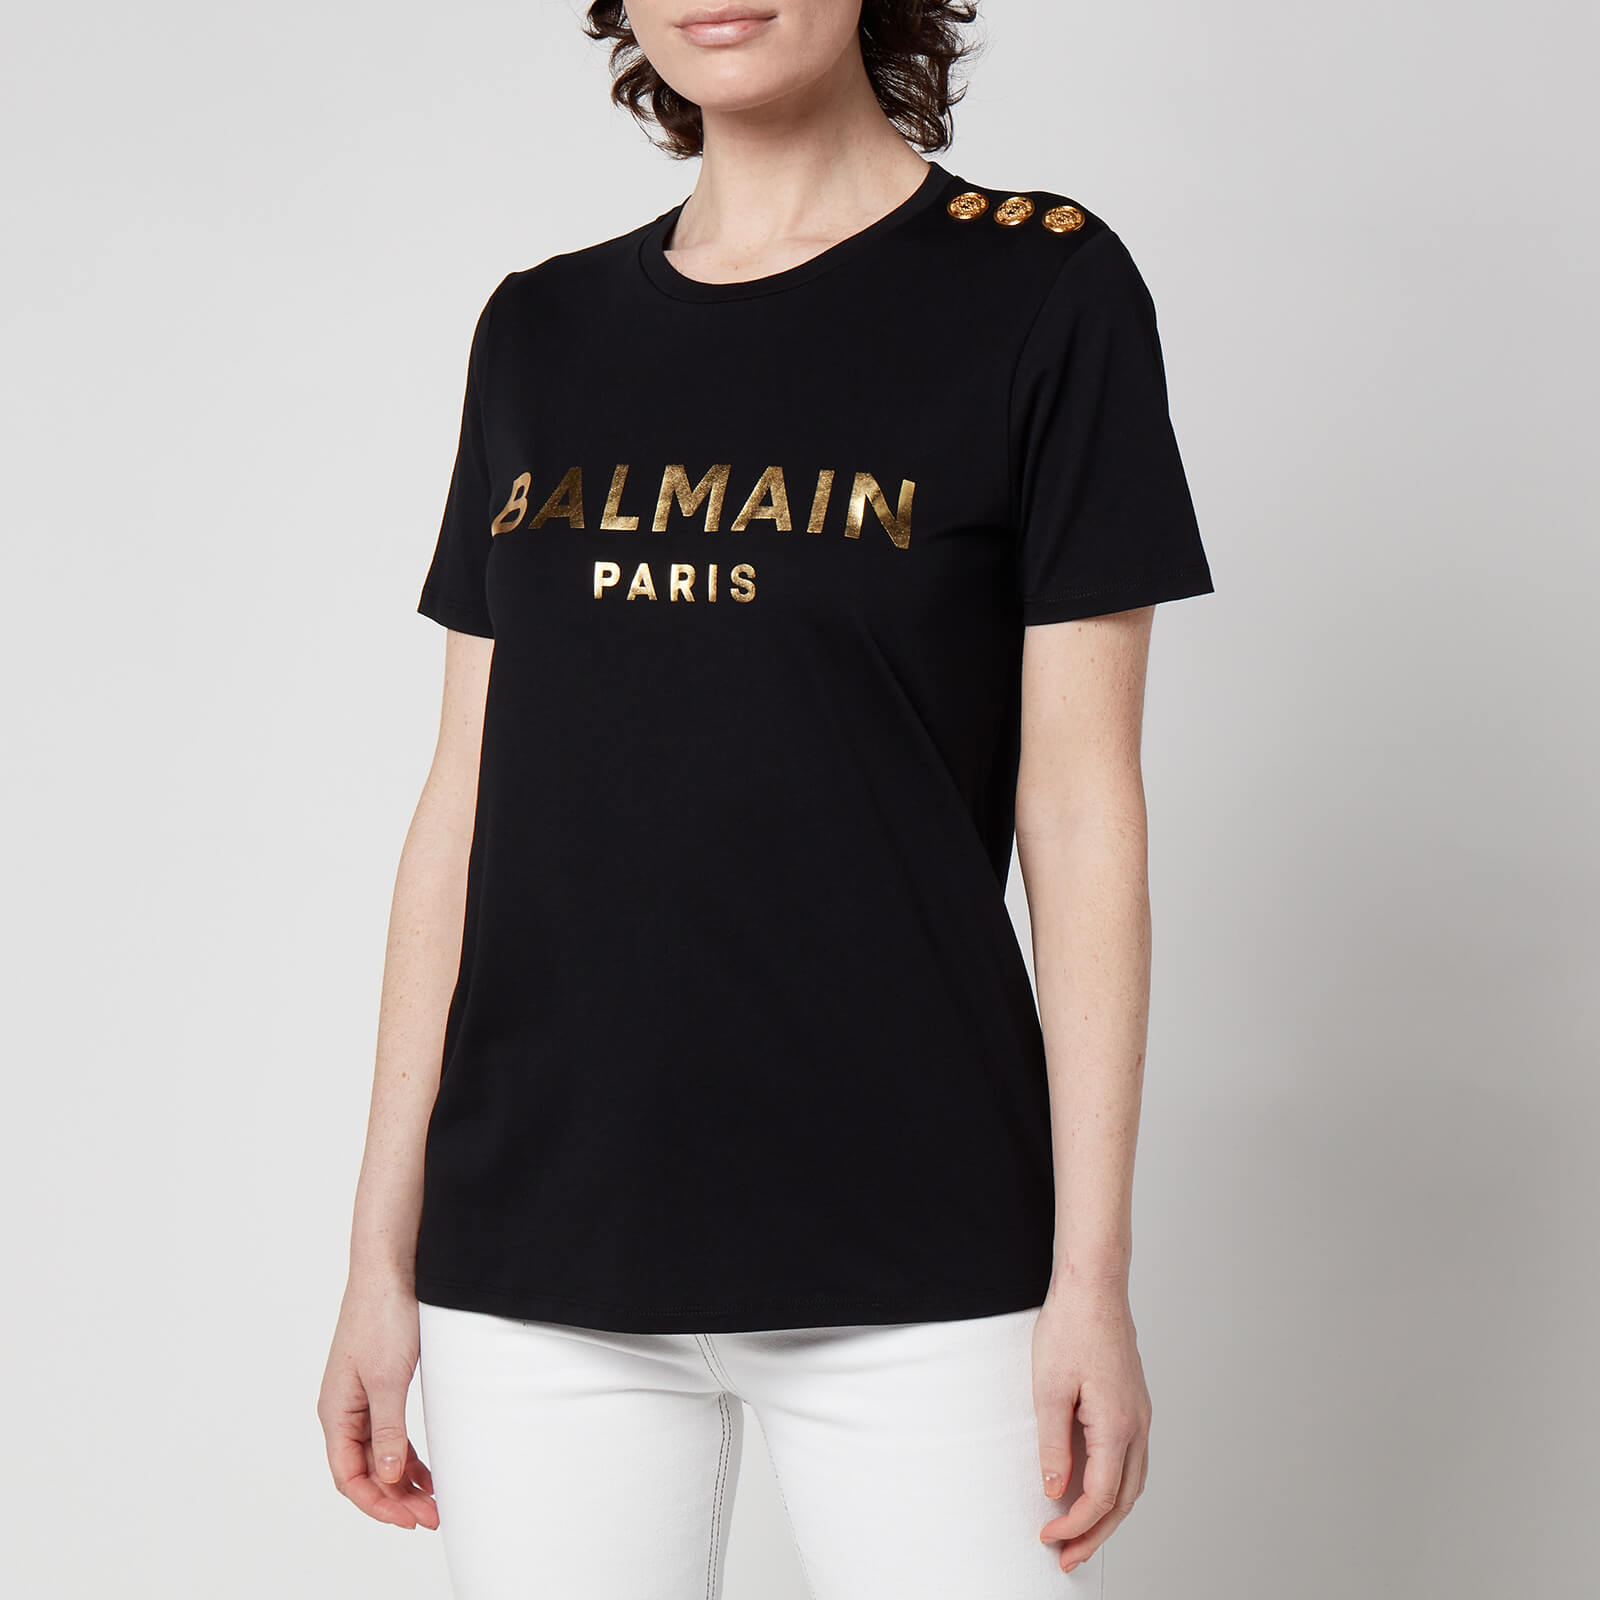 Balmain Women's 3 Button Metallic Printed Balmain T-Shirt - Black - XS